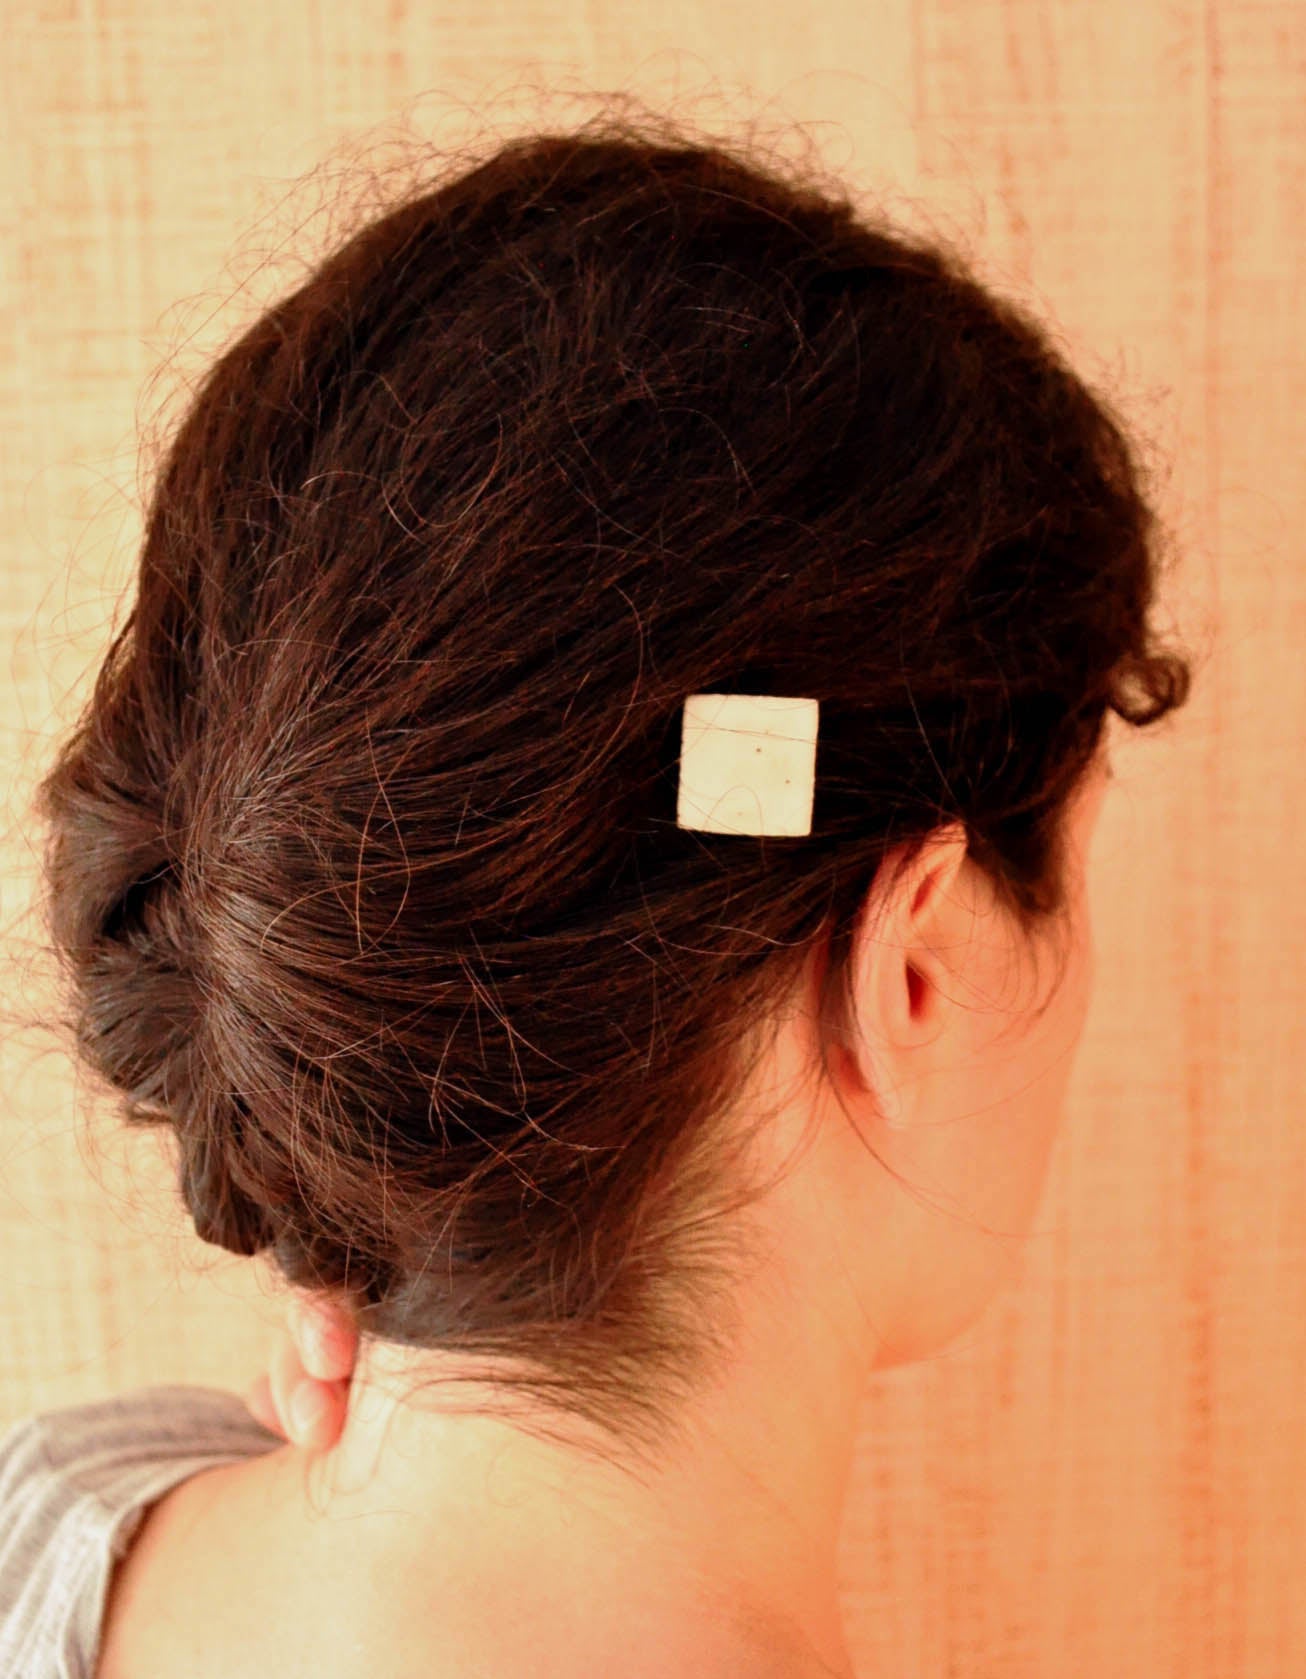 Square Sengai hair accessory